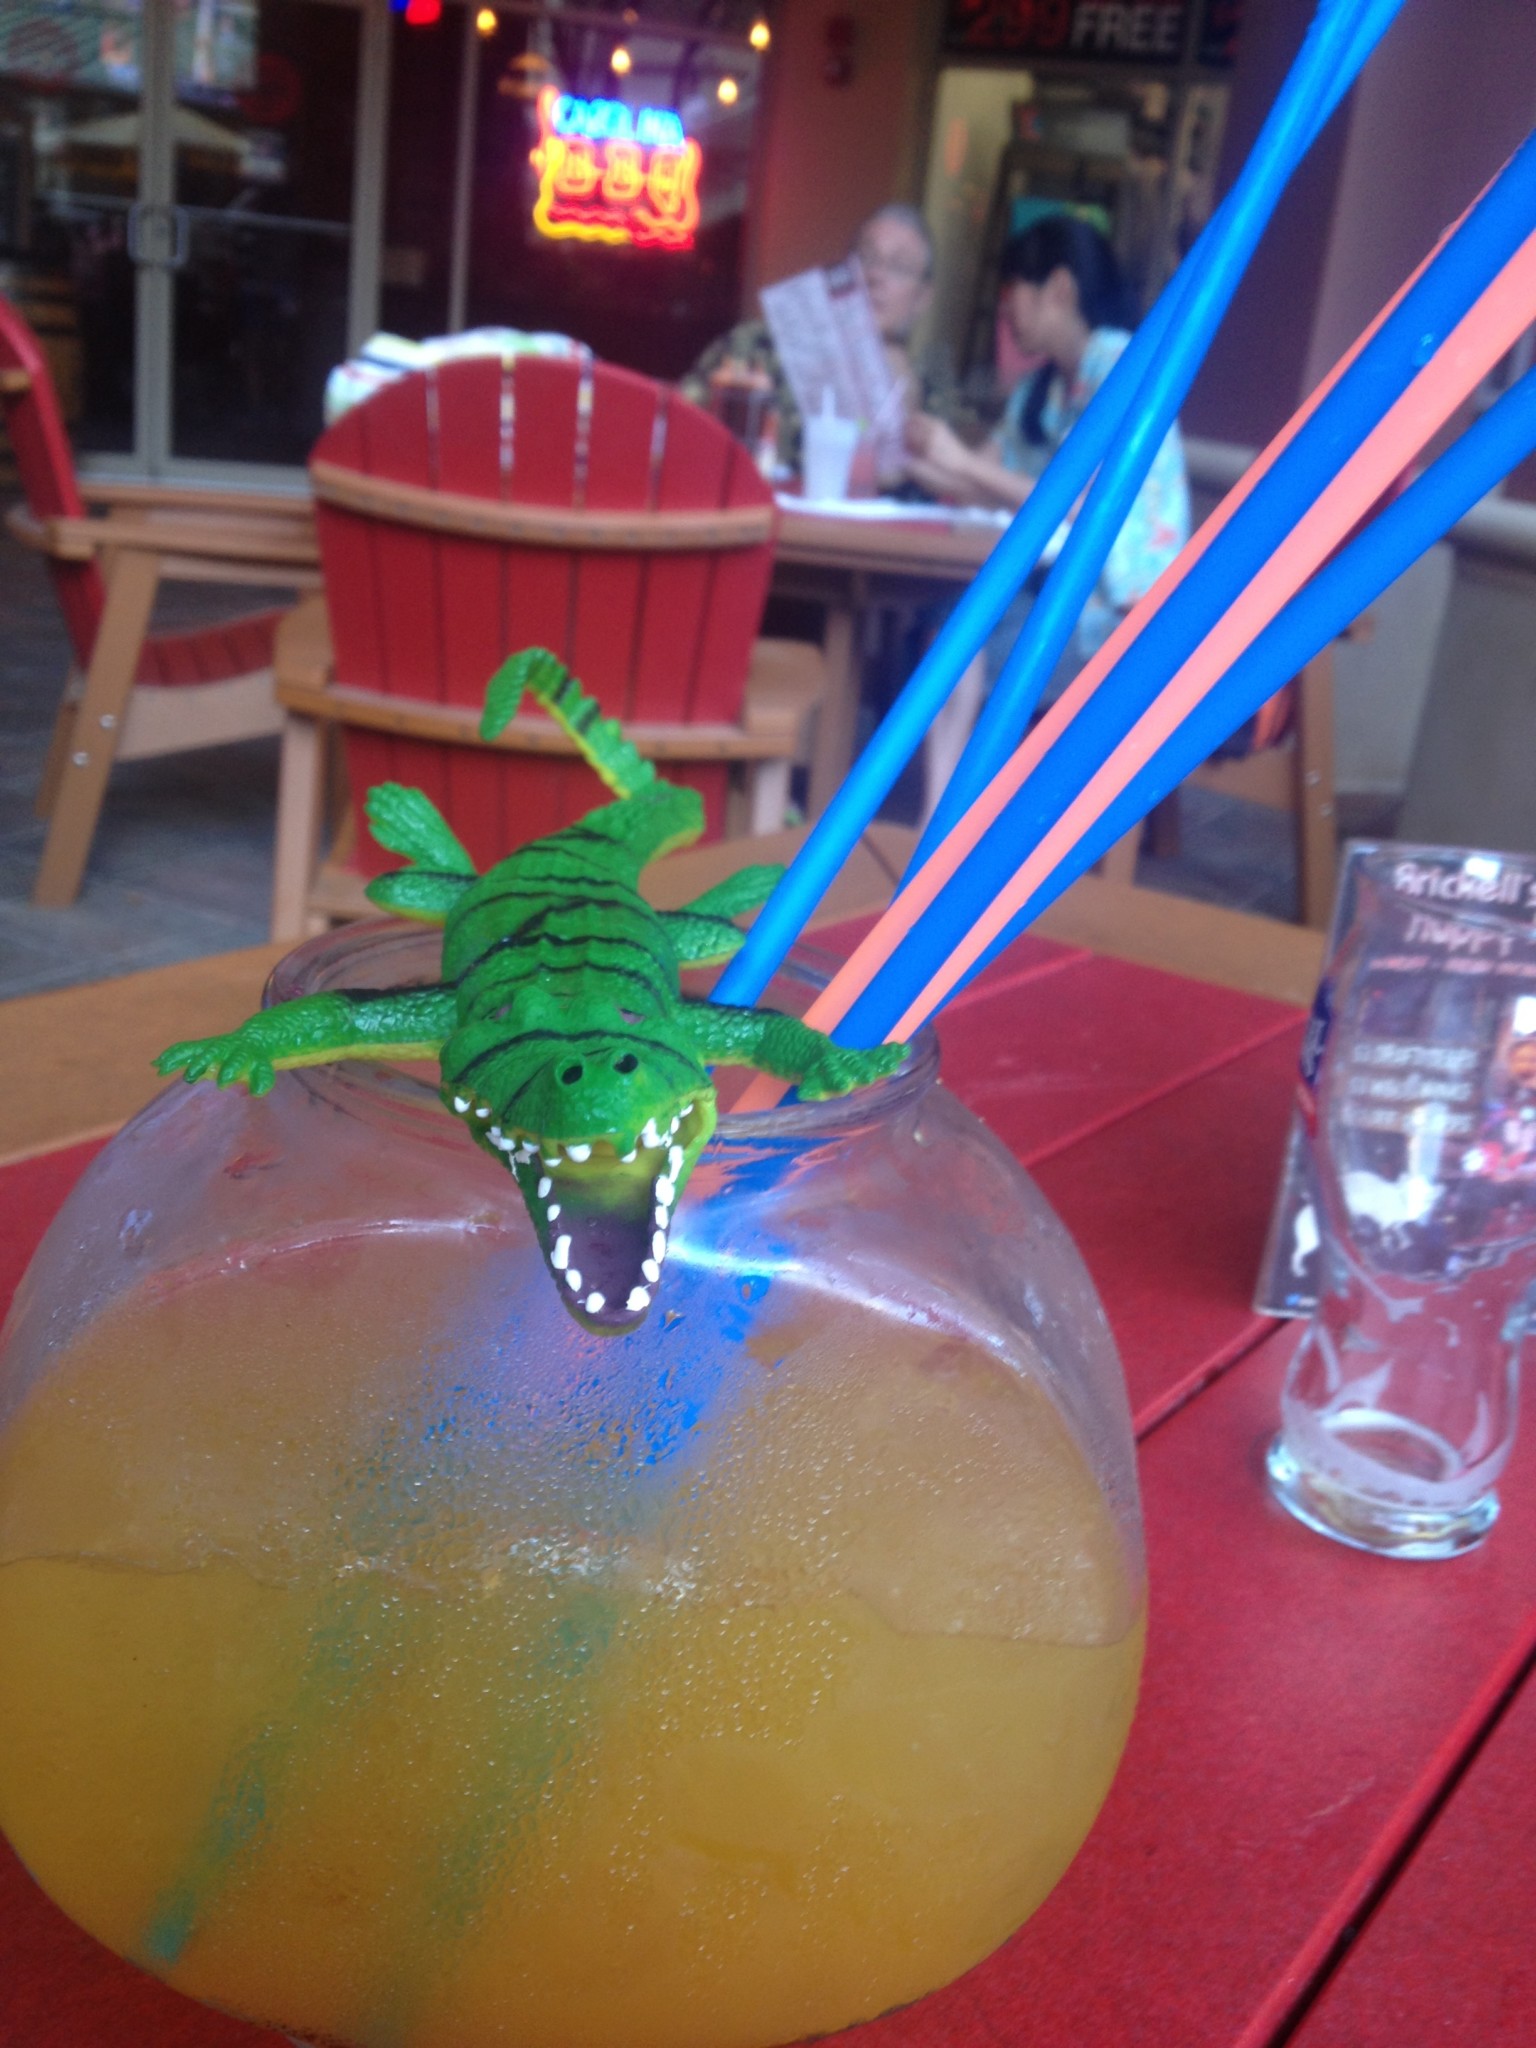 a toy lizard in a glass of liquid